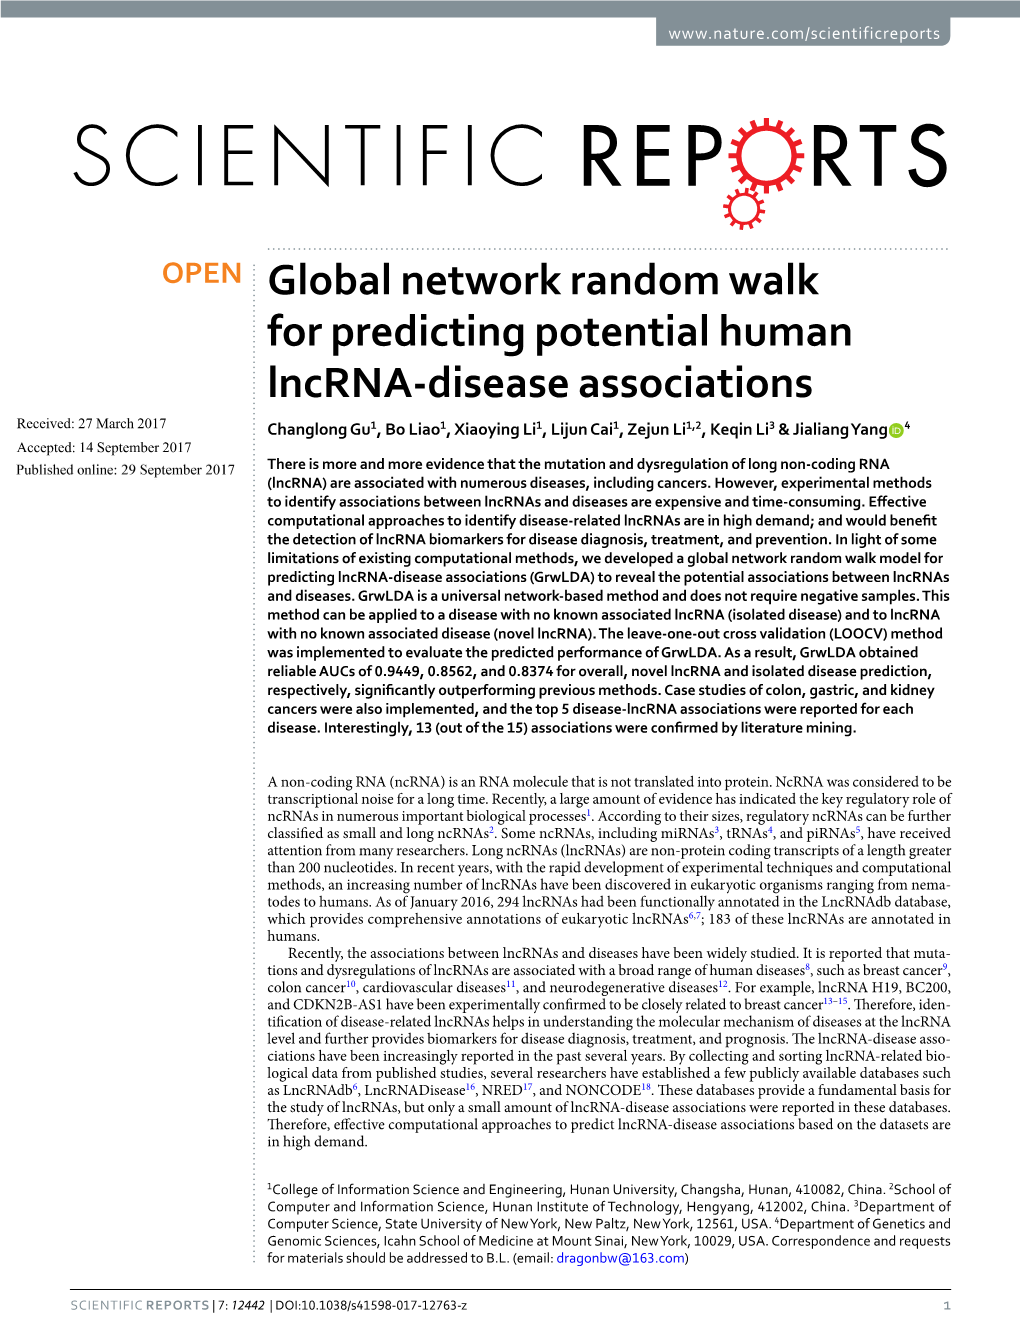 Global Network Random Walk for Predicting Potential Human Lncrna